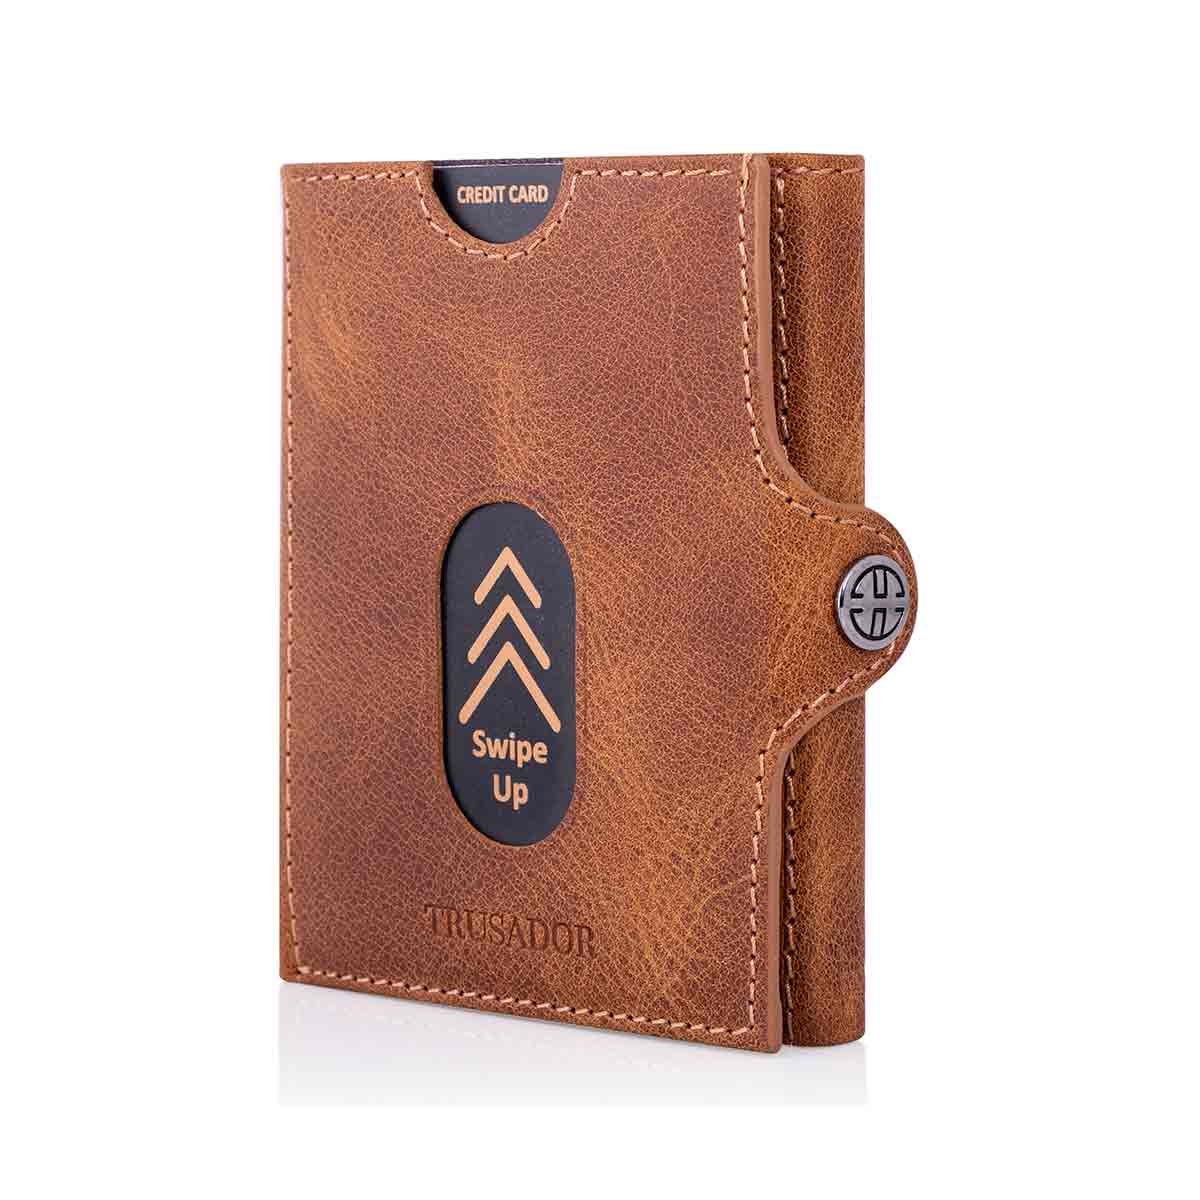 DONBOLSO Minimalist Leather Wallet for Men - Slim Wallet with RFID Blocking  Protection - Pocket Wallet, Bill & Credit Card Holder - Best Wallet Gift